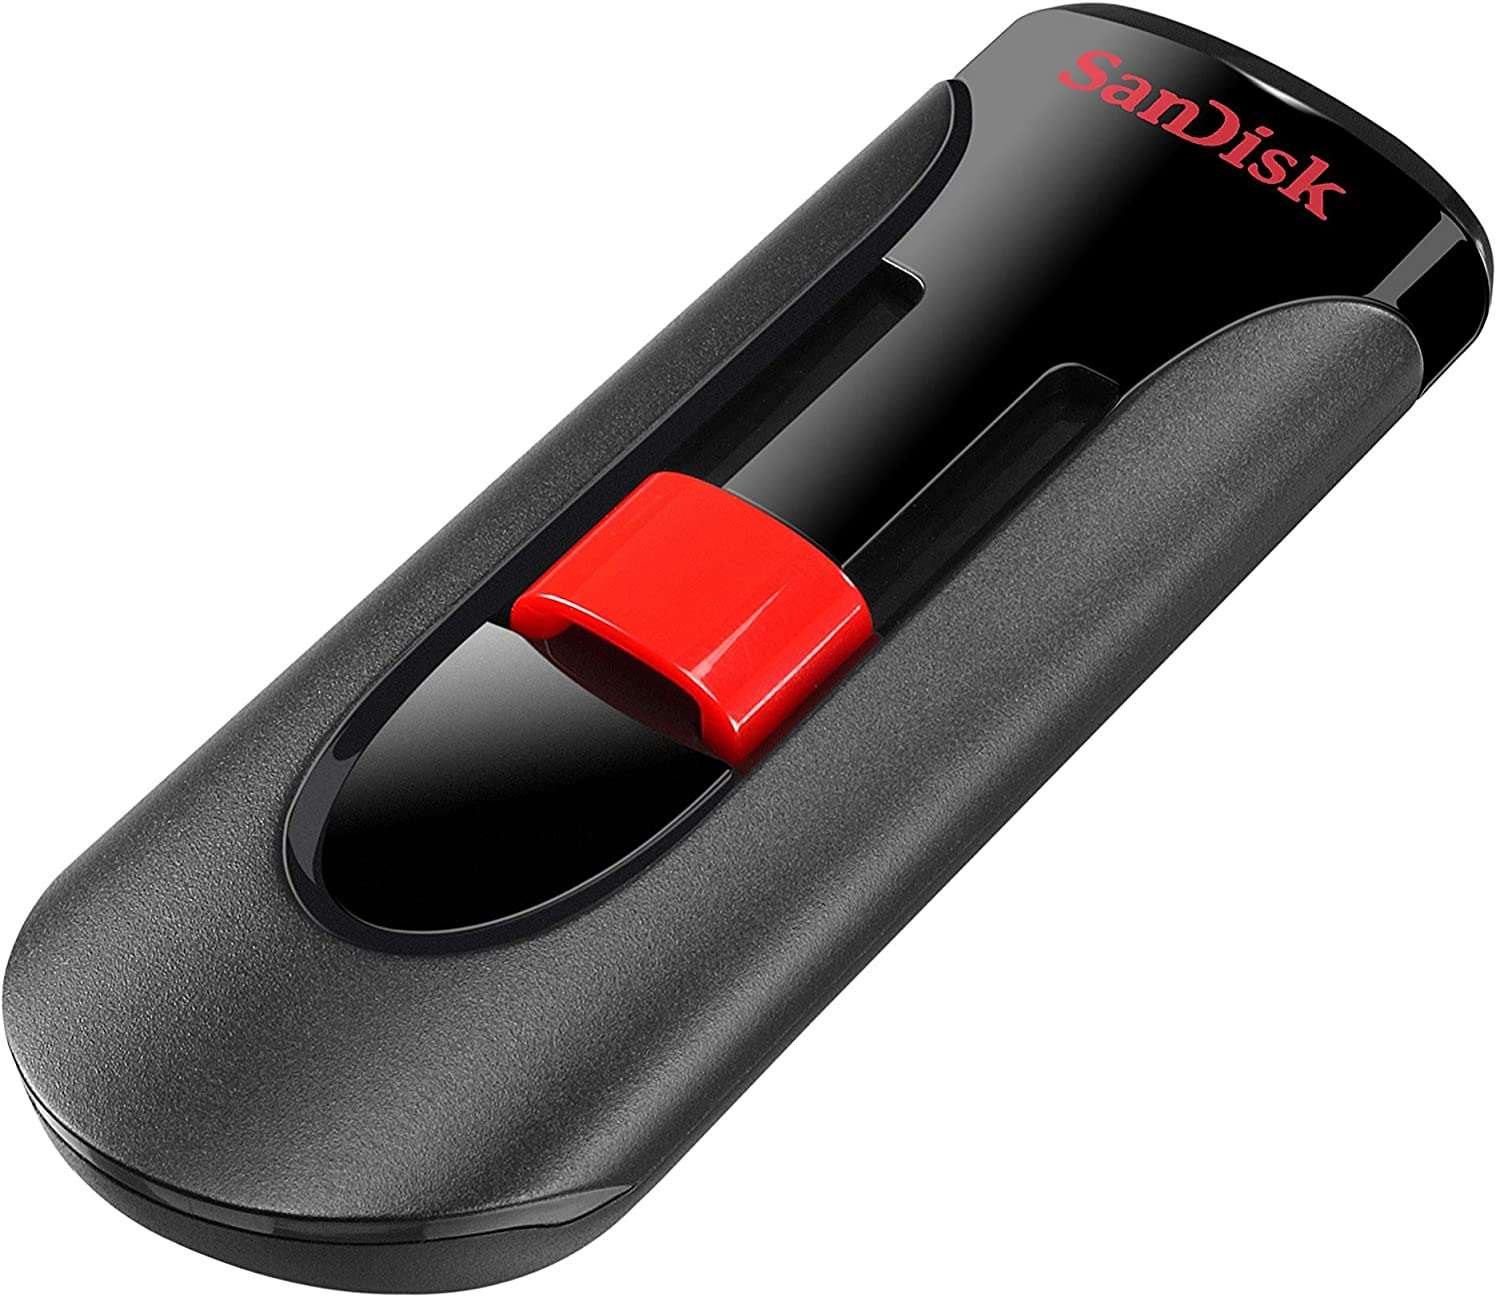  Sandisk Cruzer Glide USB Flash Drive SDCZ600 2.0 128gb 